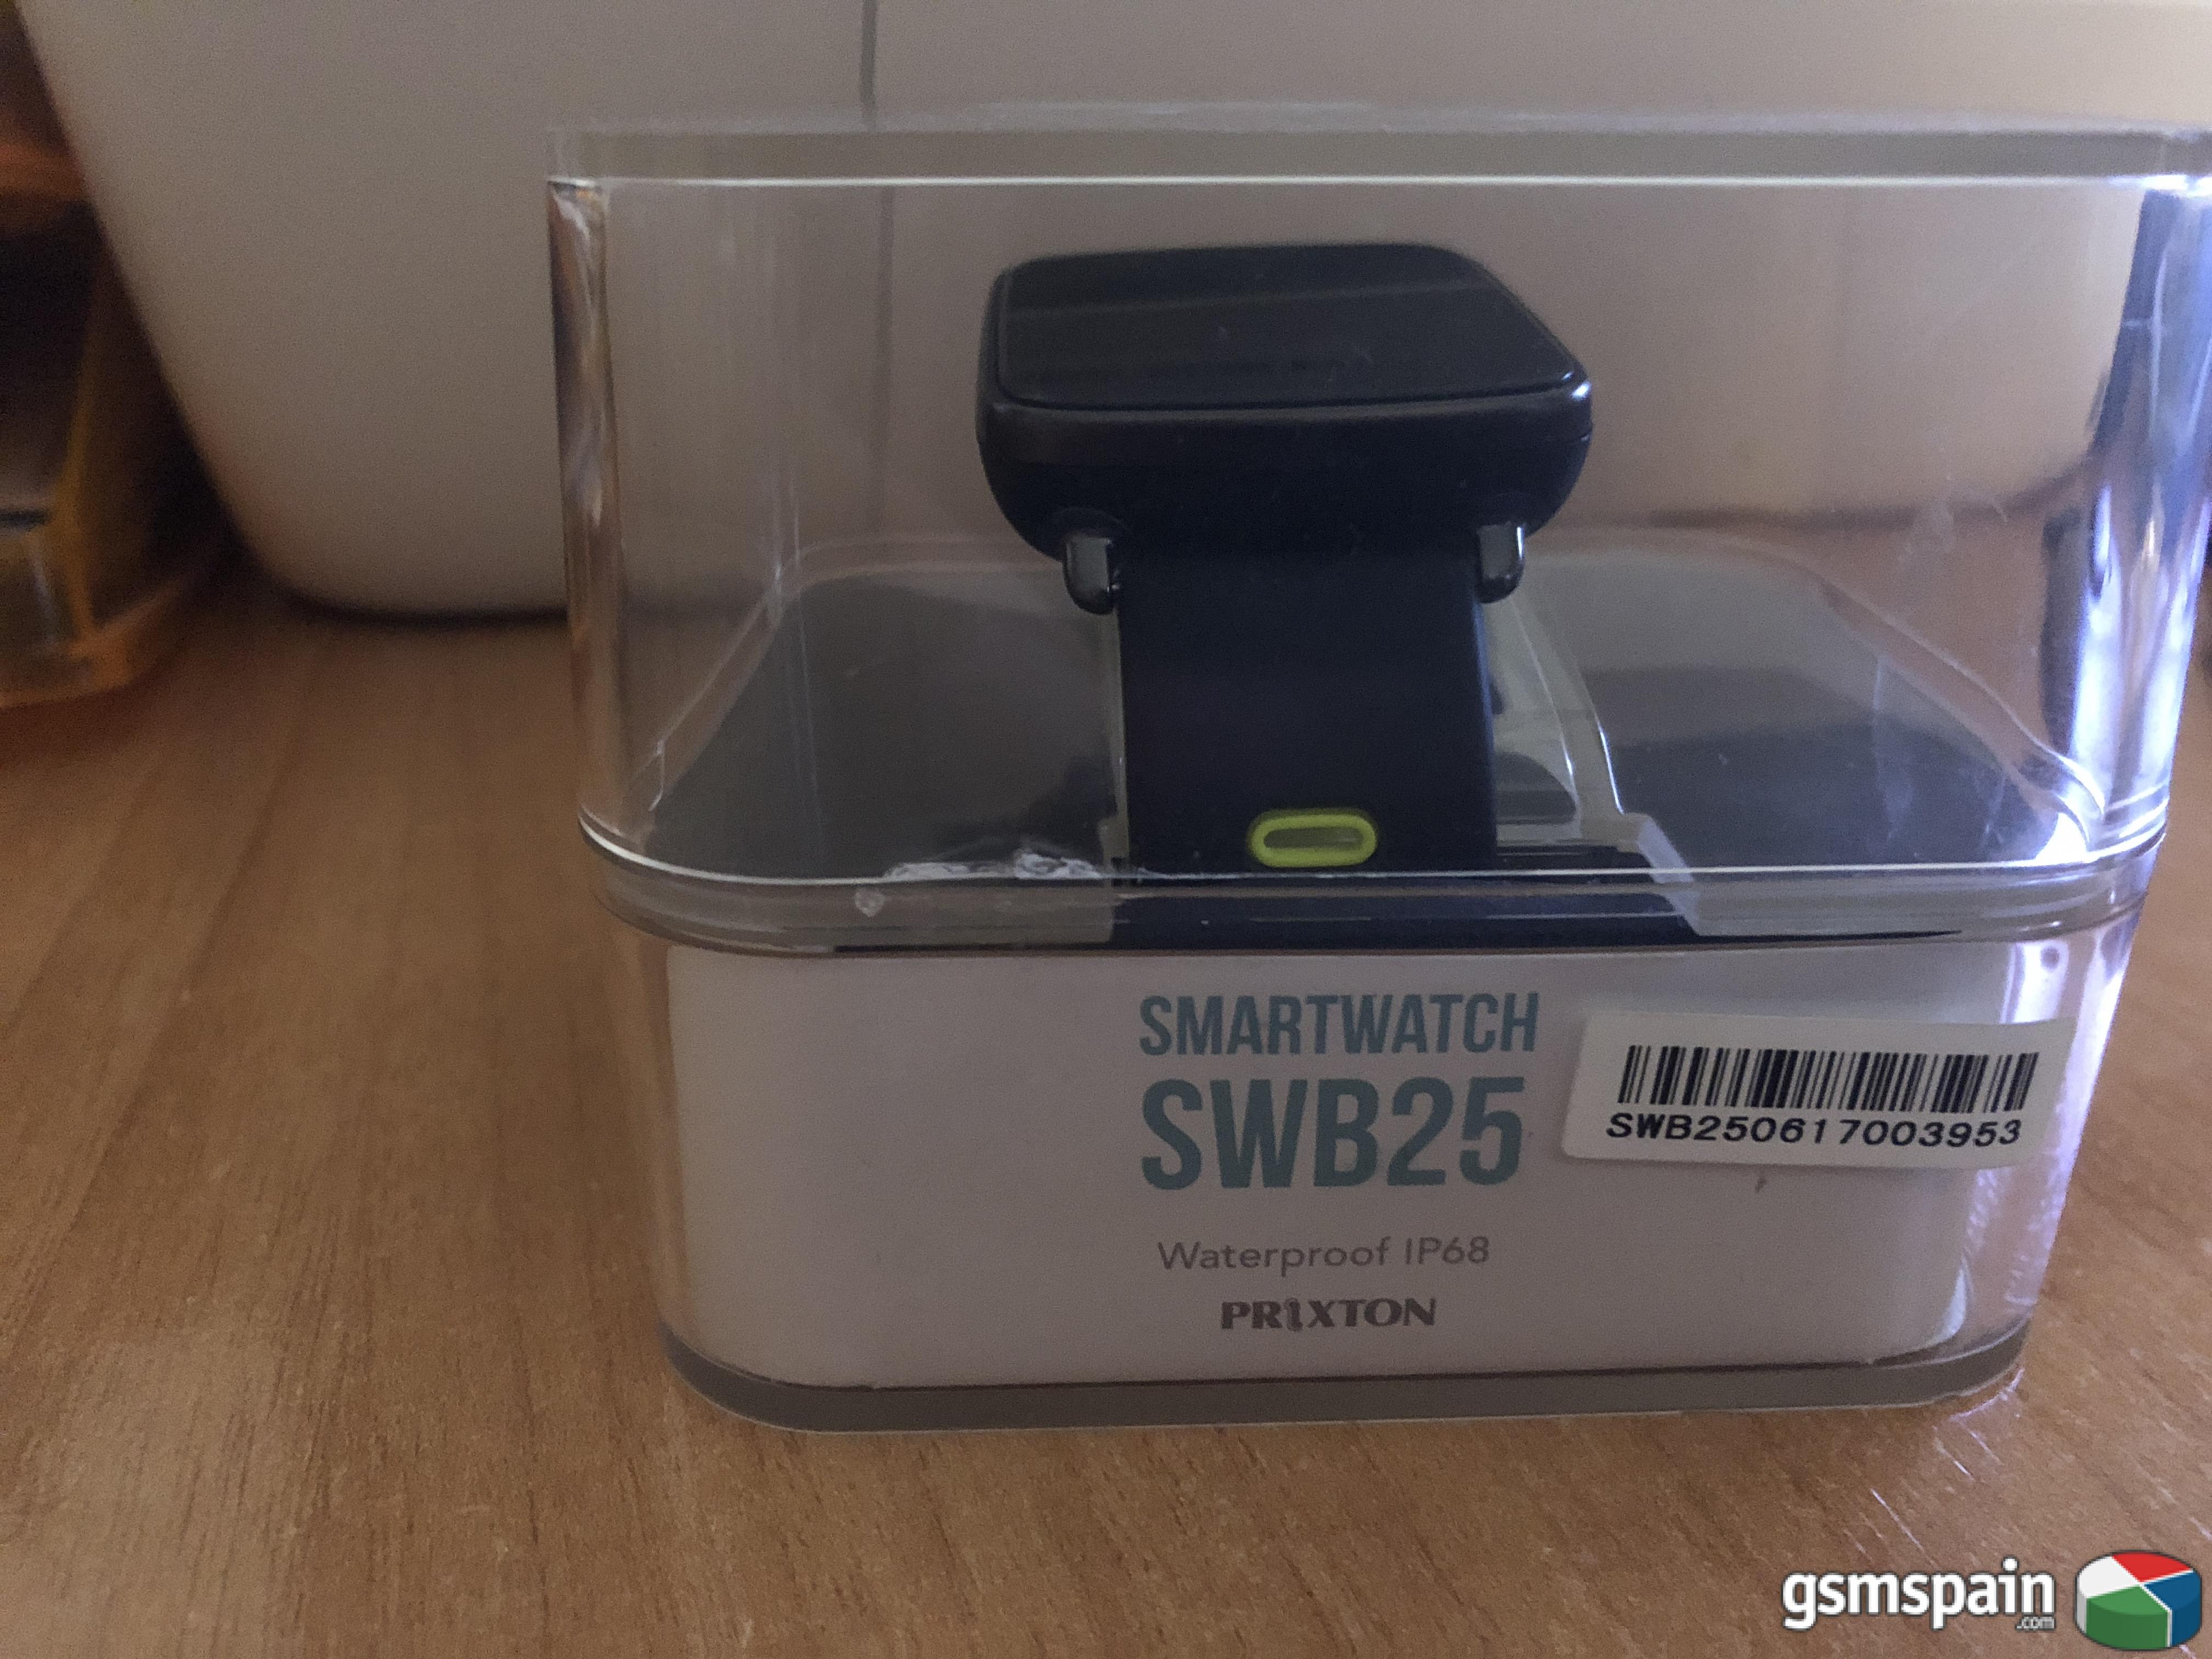 [VENDO] Smartwatch Prixton SWB25 waterproof IP68